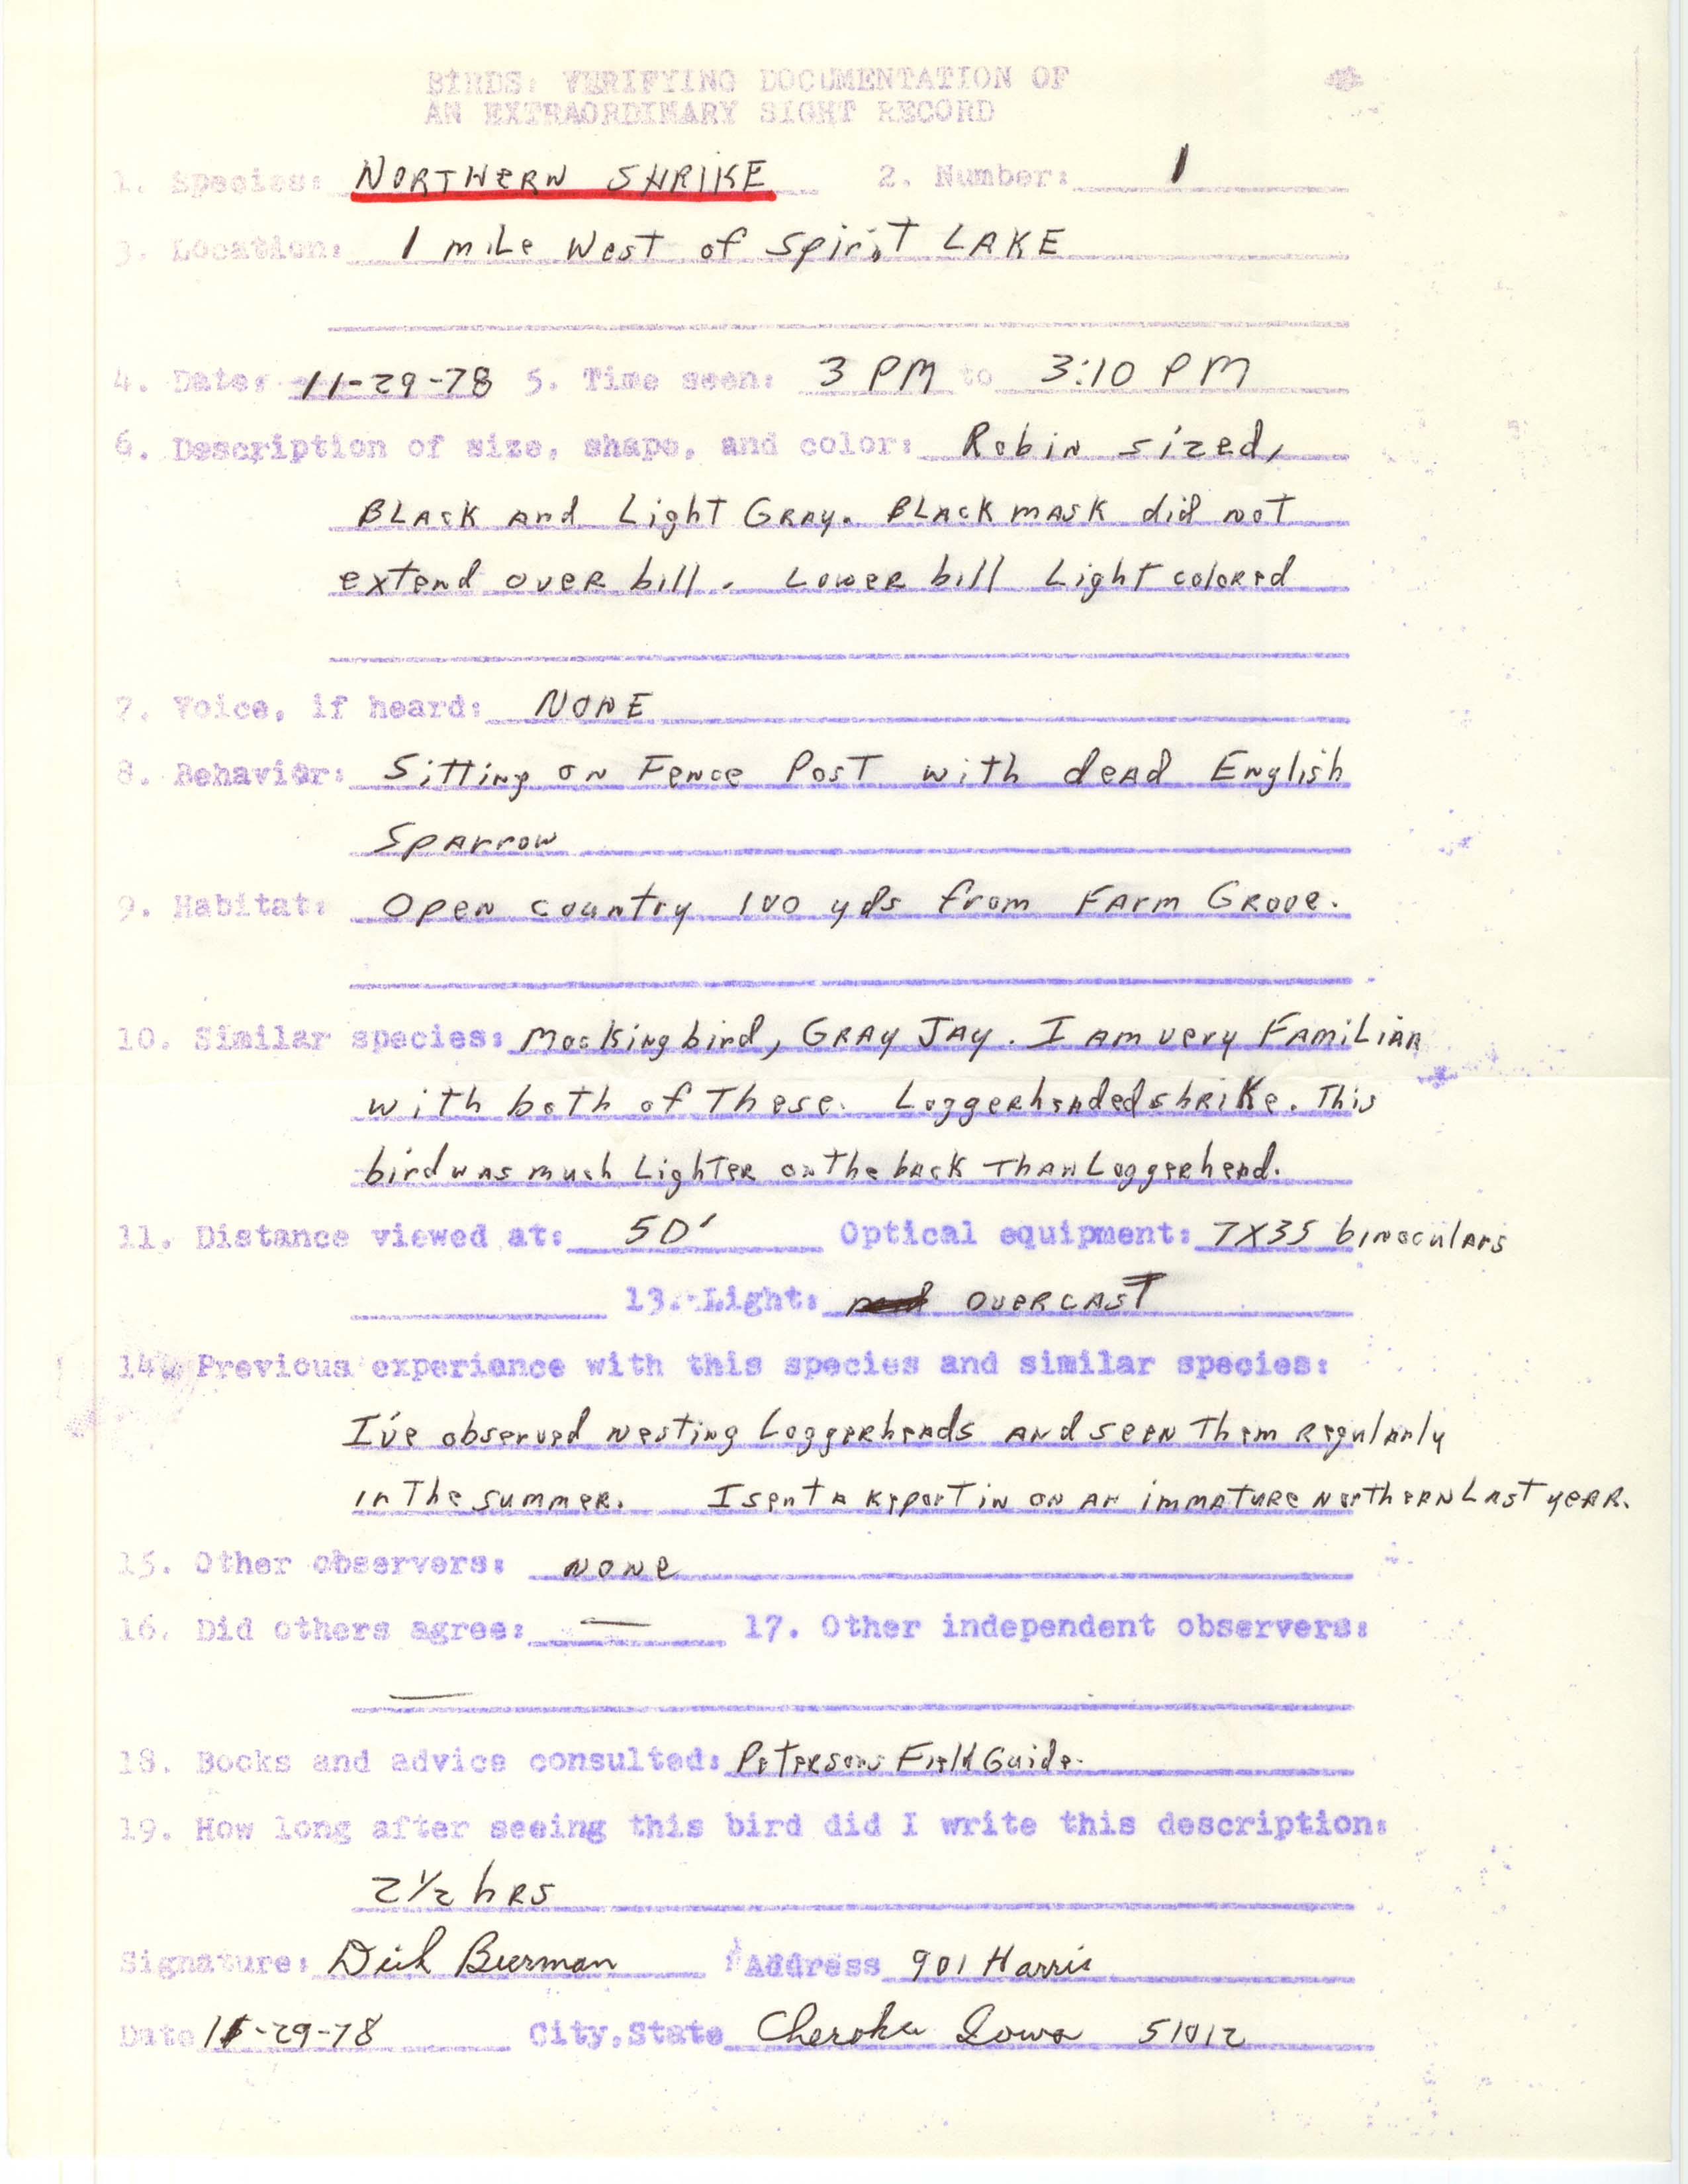 Rare bird documentation form for Northern Shrike west of Spirit Lake, 1978